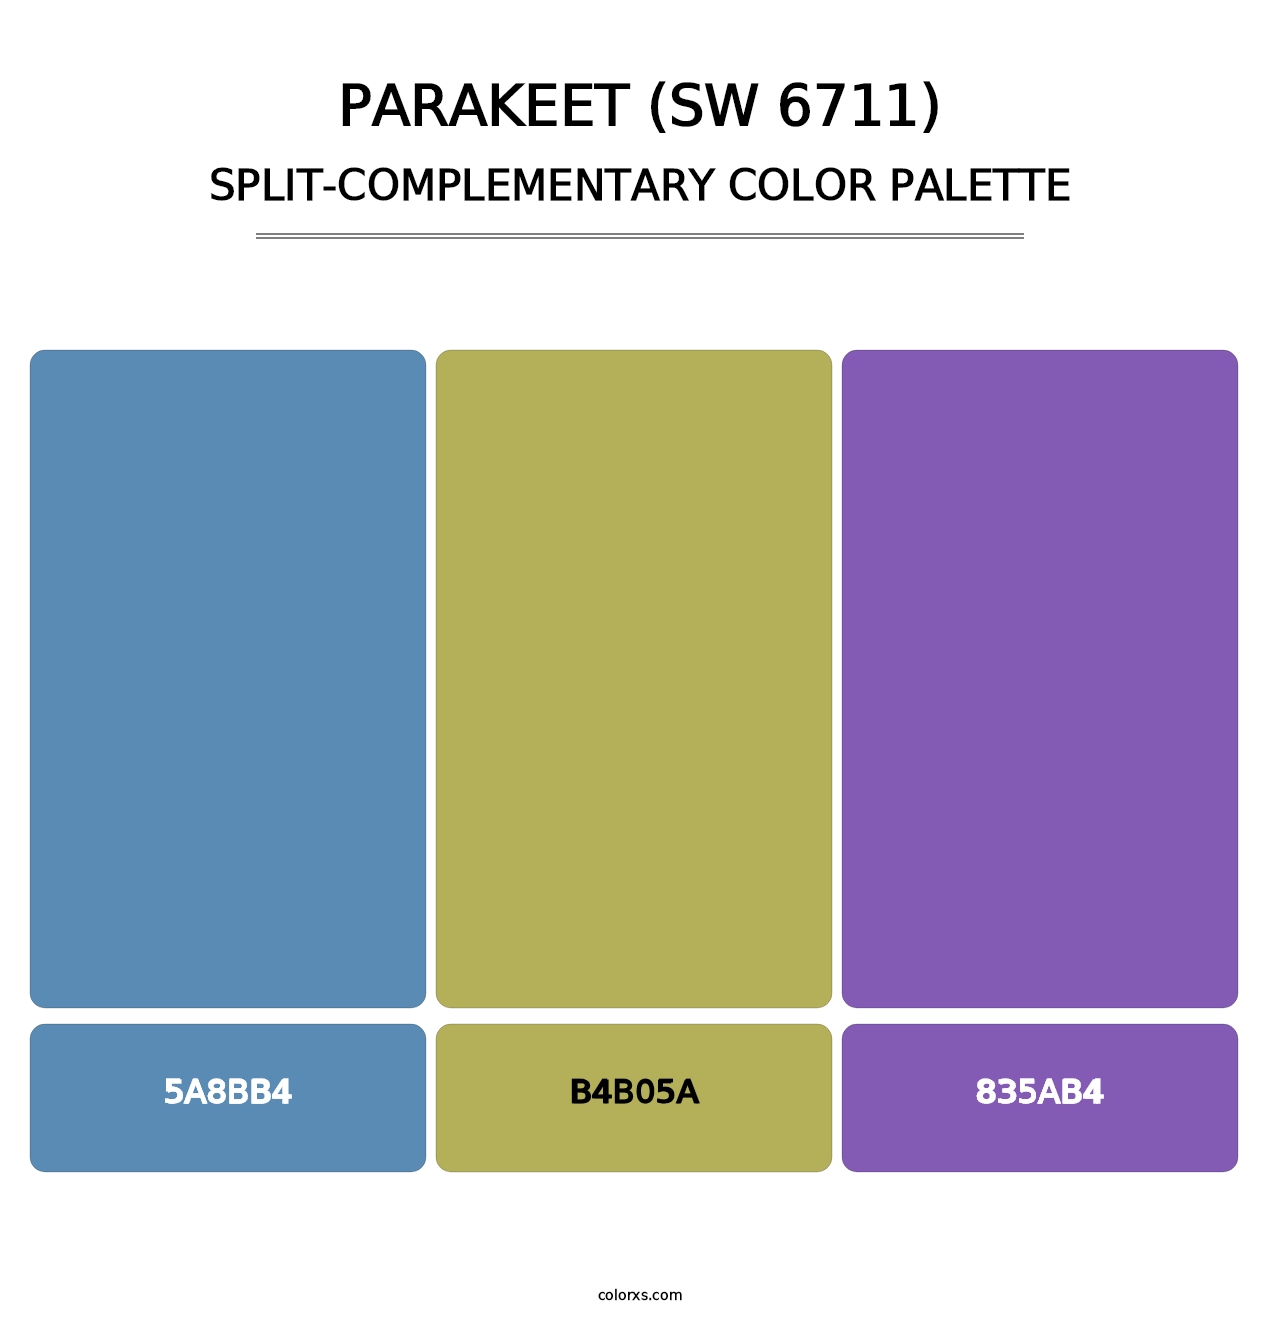 Parakeet (SW 6711) - Split-Complementary Color Palette